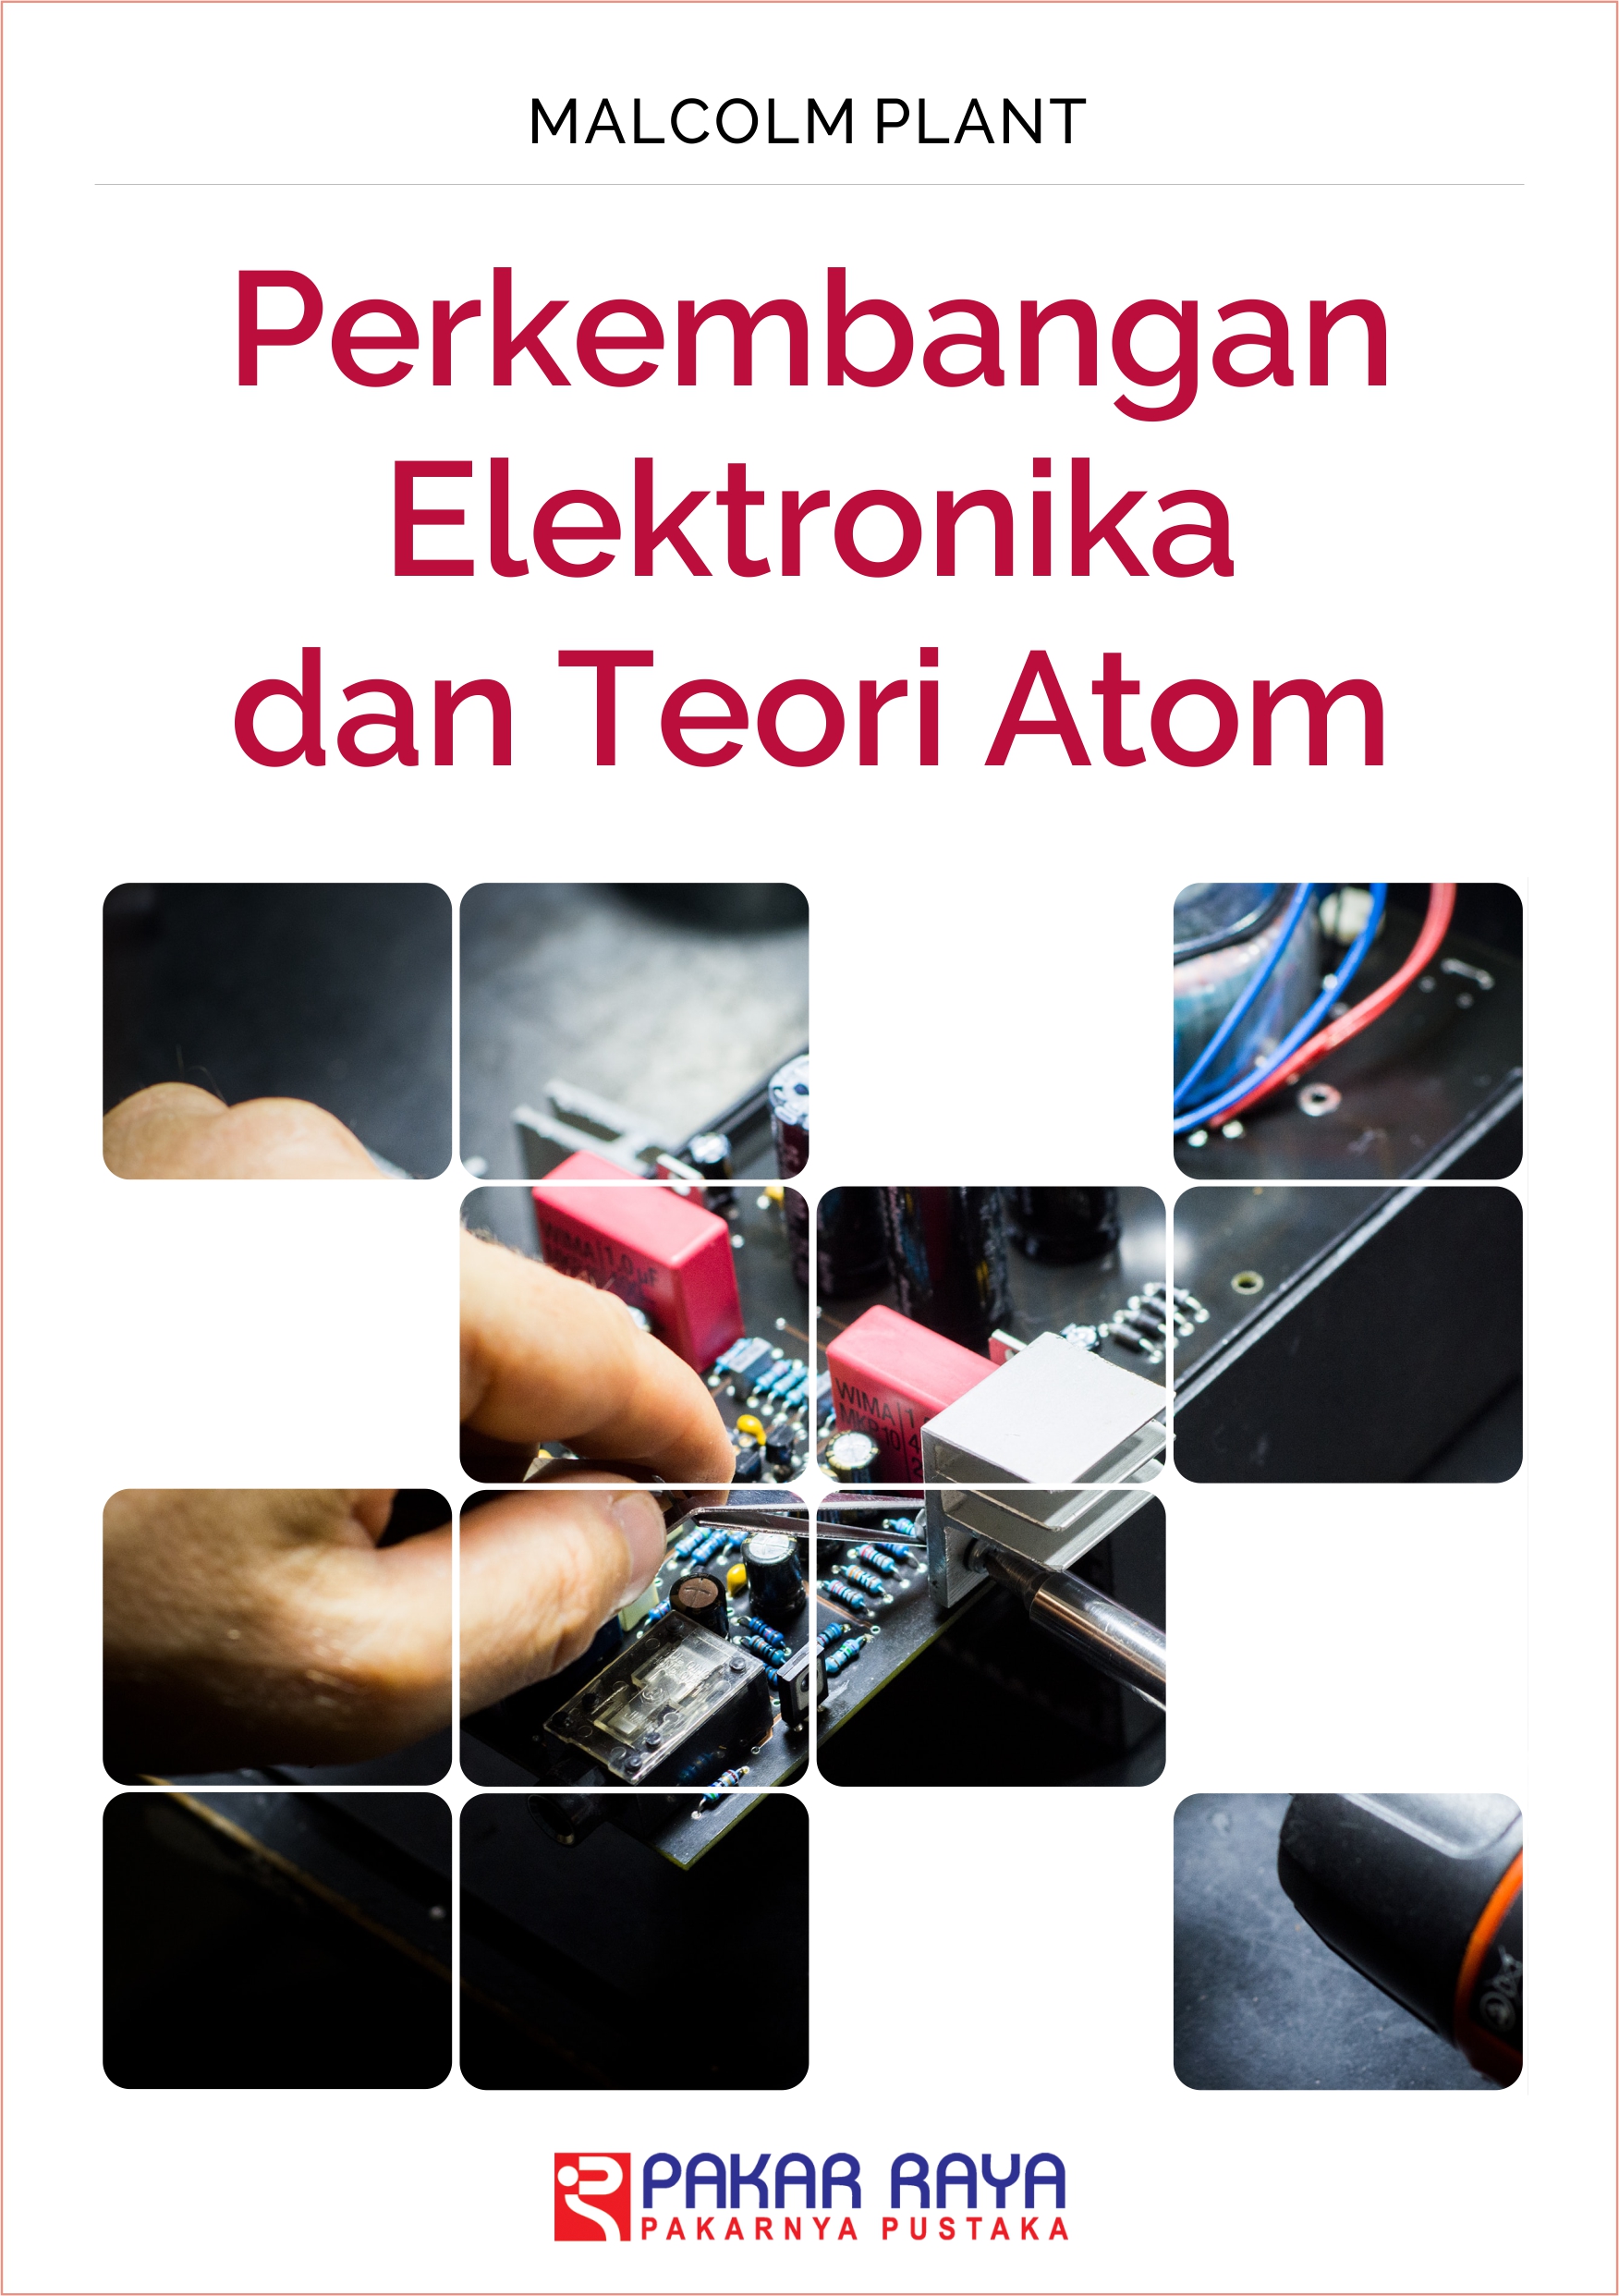 Perkembangan elektronika dan teori atom [sumber elektronis]